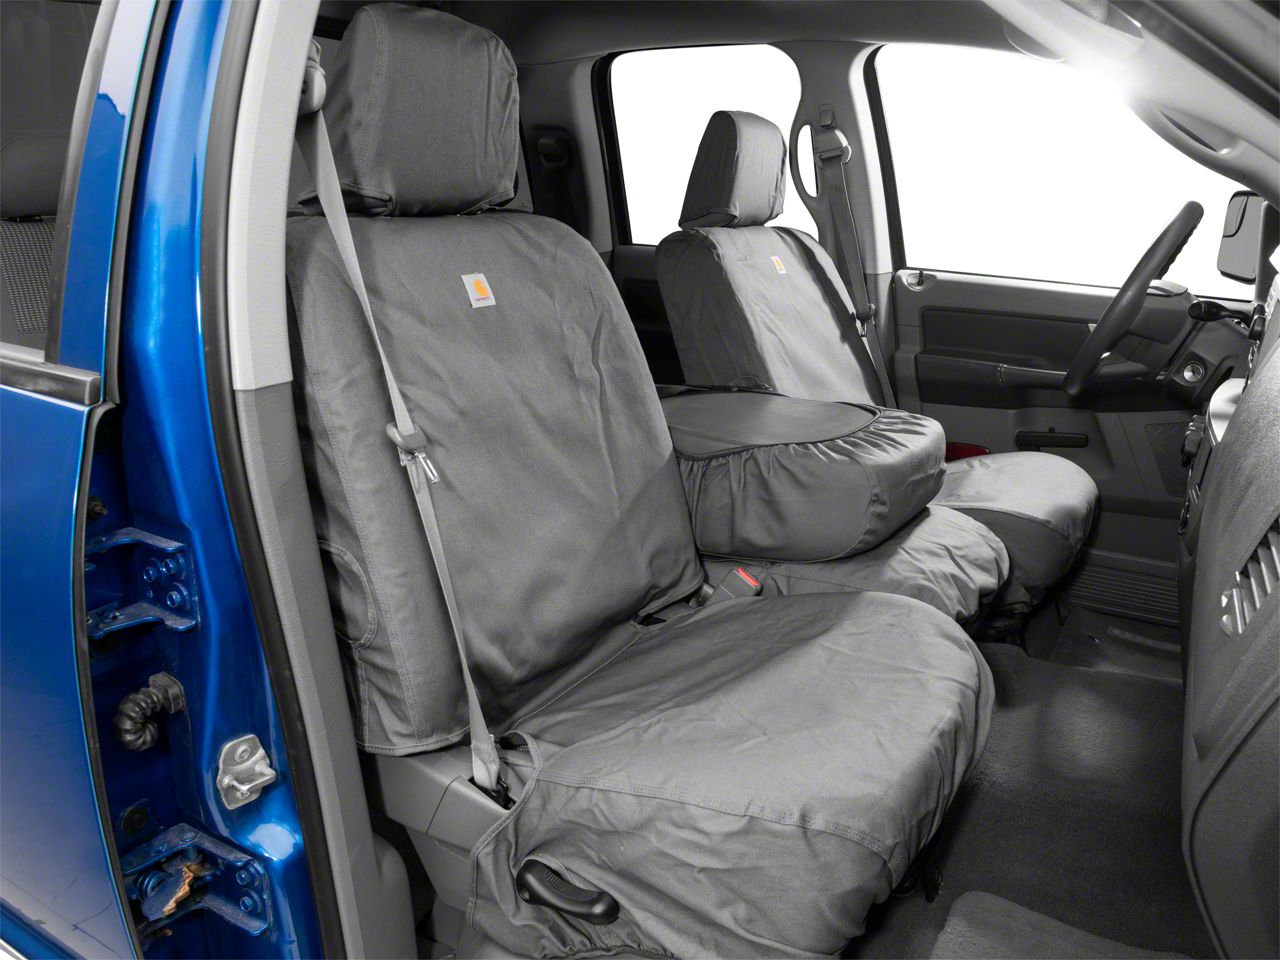 Covercraft Ram Carhartt Seat Saver Front Cover Gravel R102837 02 08 1500 W Bench - 2007 Dodge Ram 2500 Carhartt Seat Covers